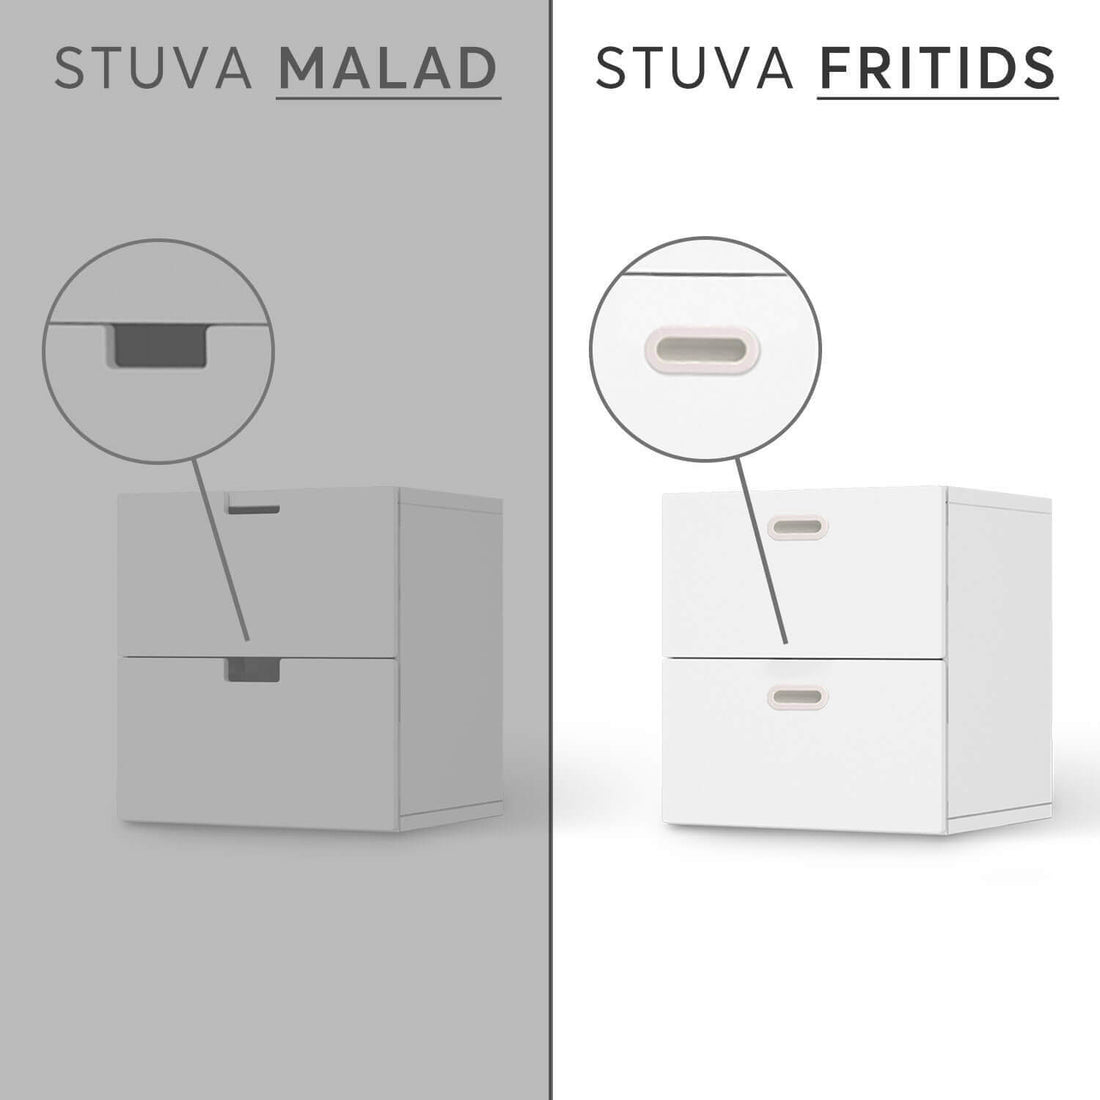 Vergleich IKEA Stuva Fritids / Malad - 2 kleine Eulen